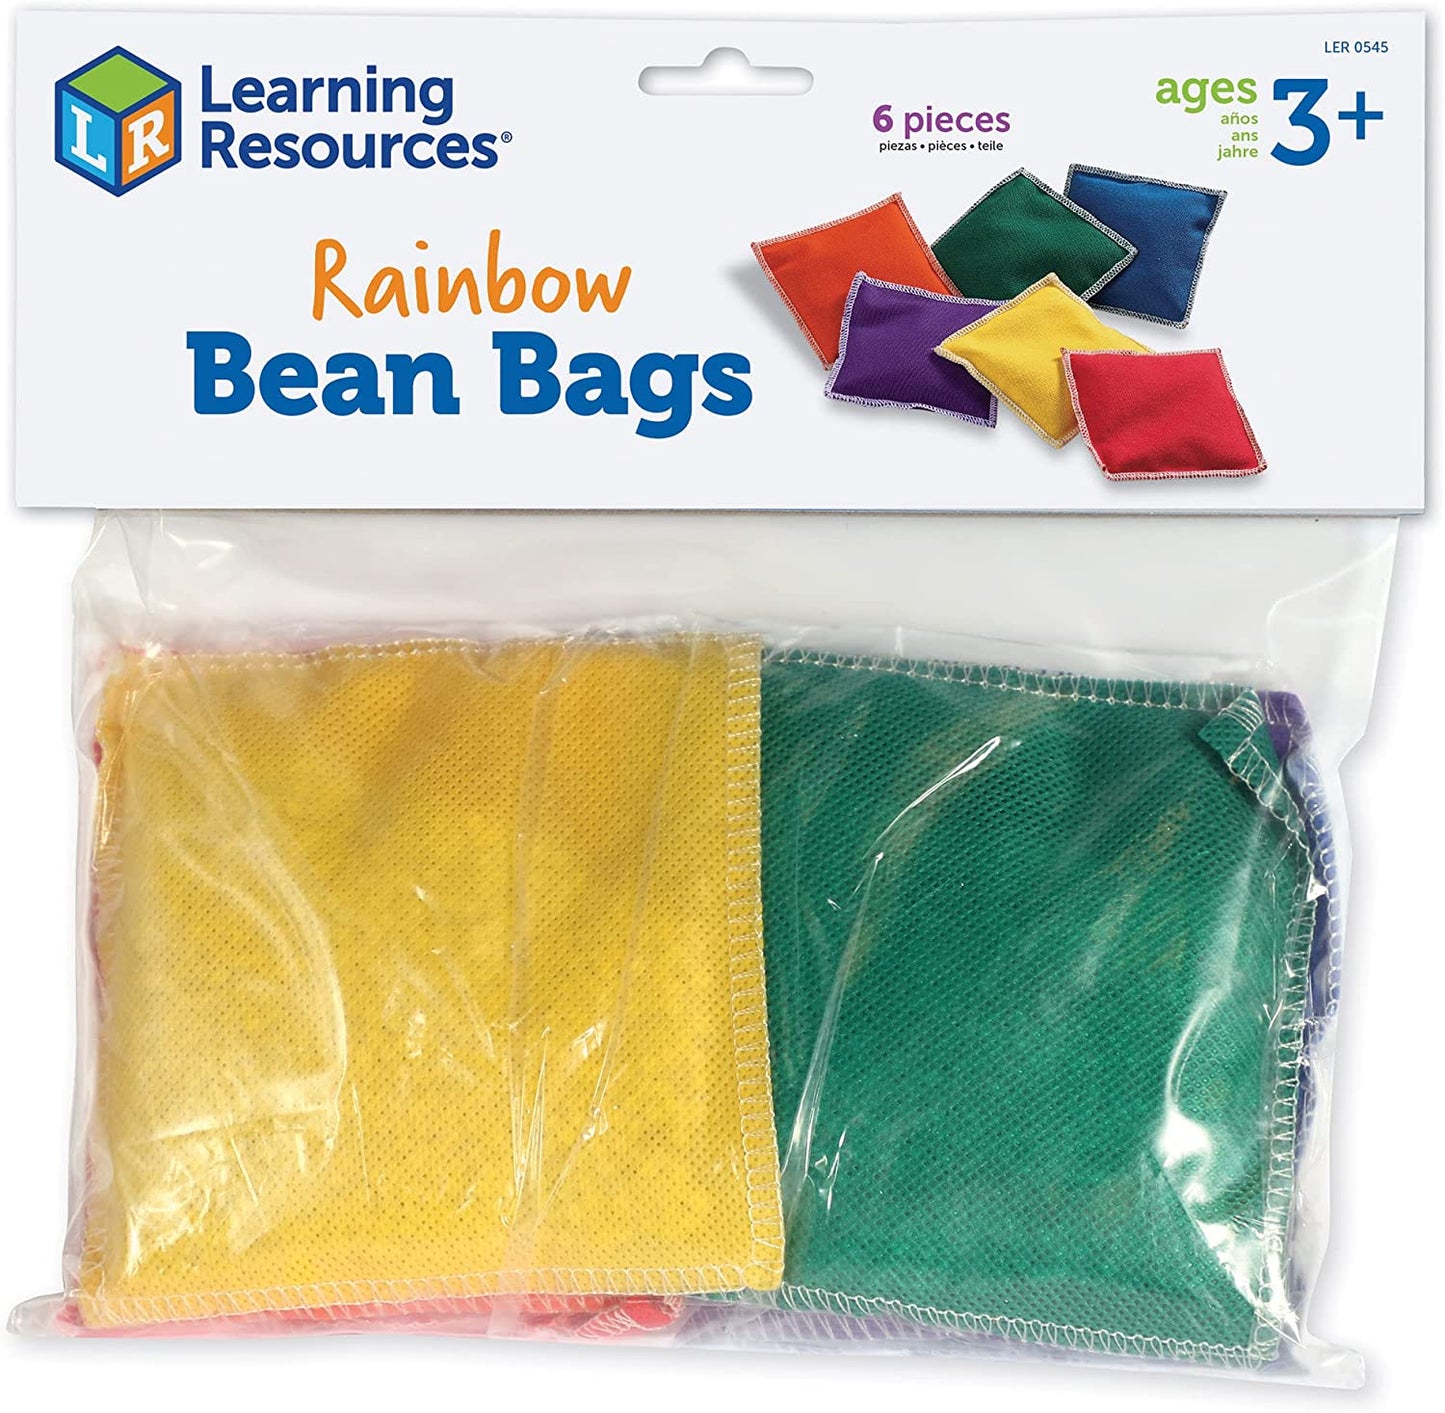 Rainbow Bean Bags